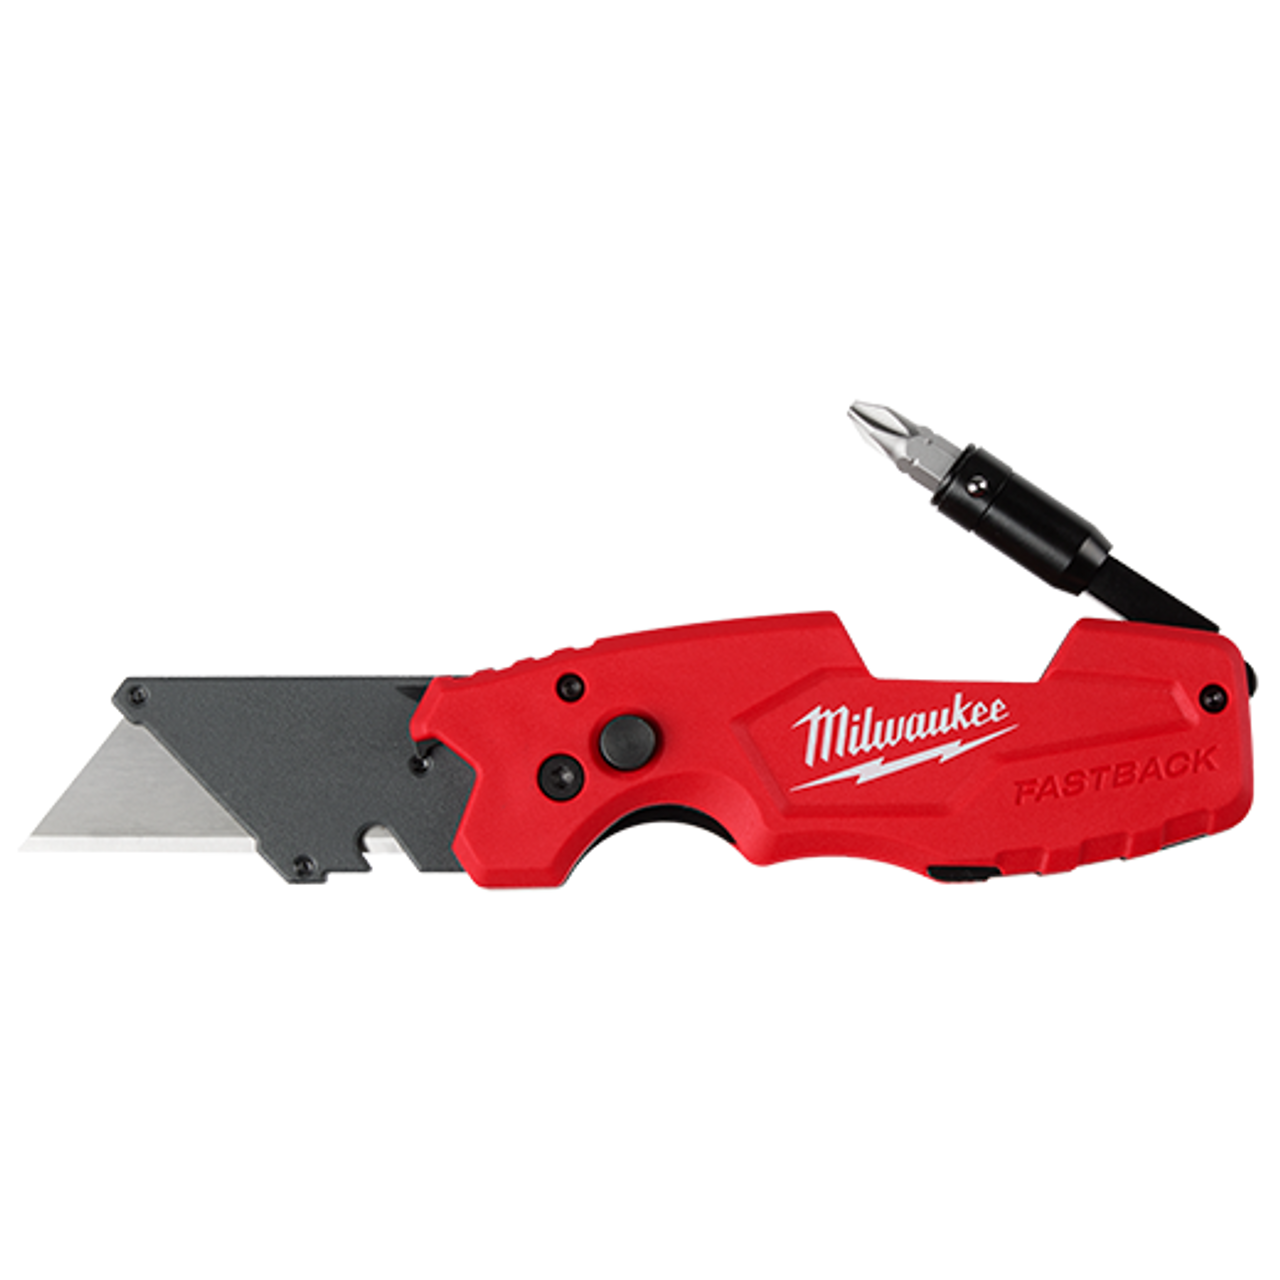 FASTBACK™ 6IN1 Folding Utility Knife